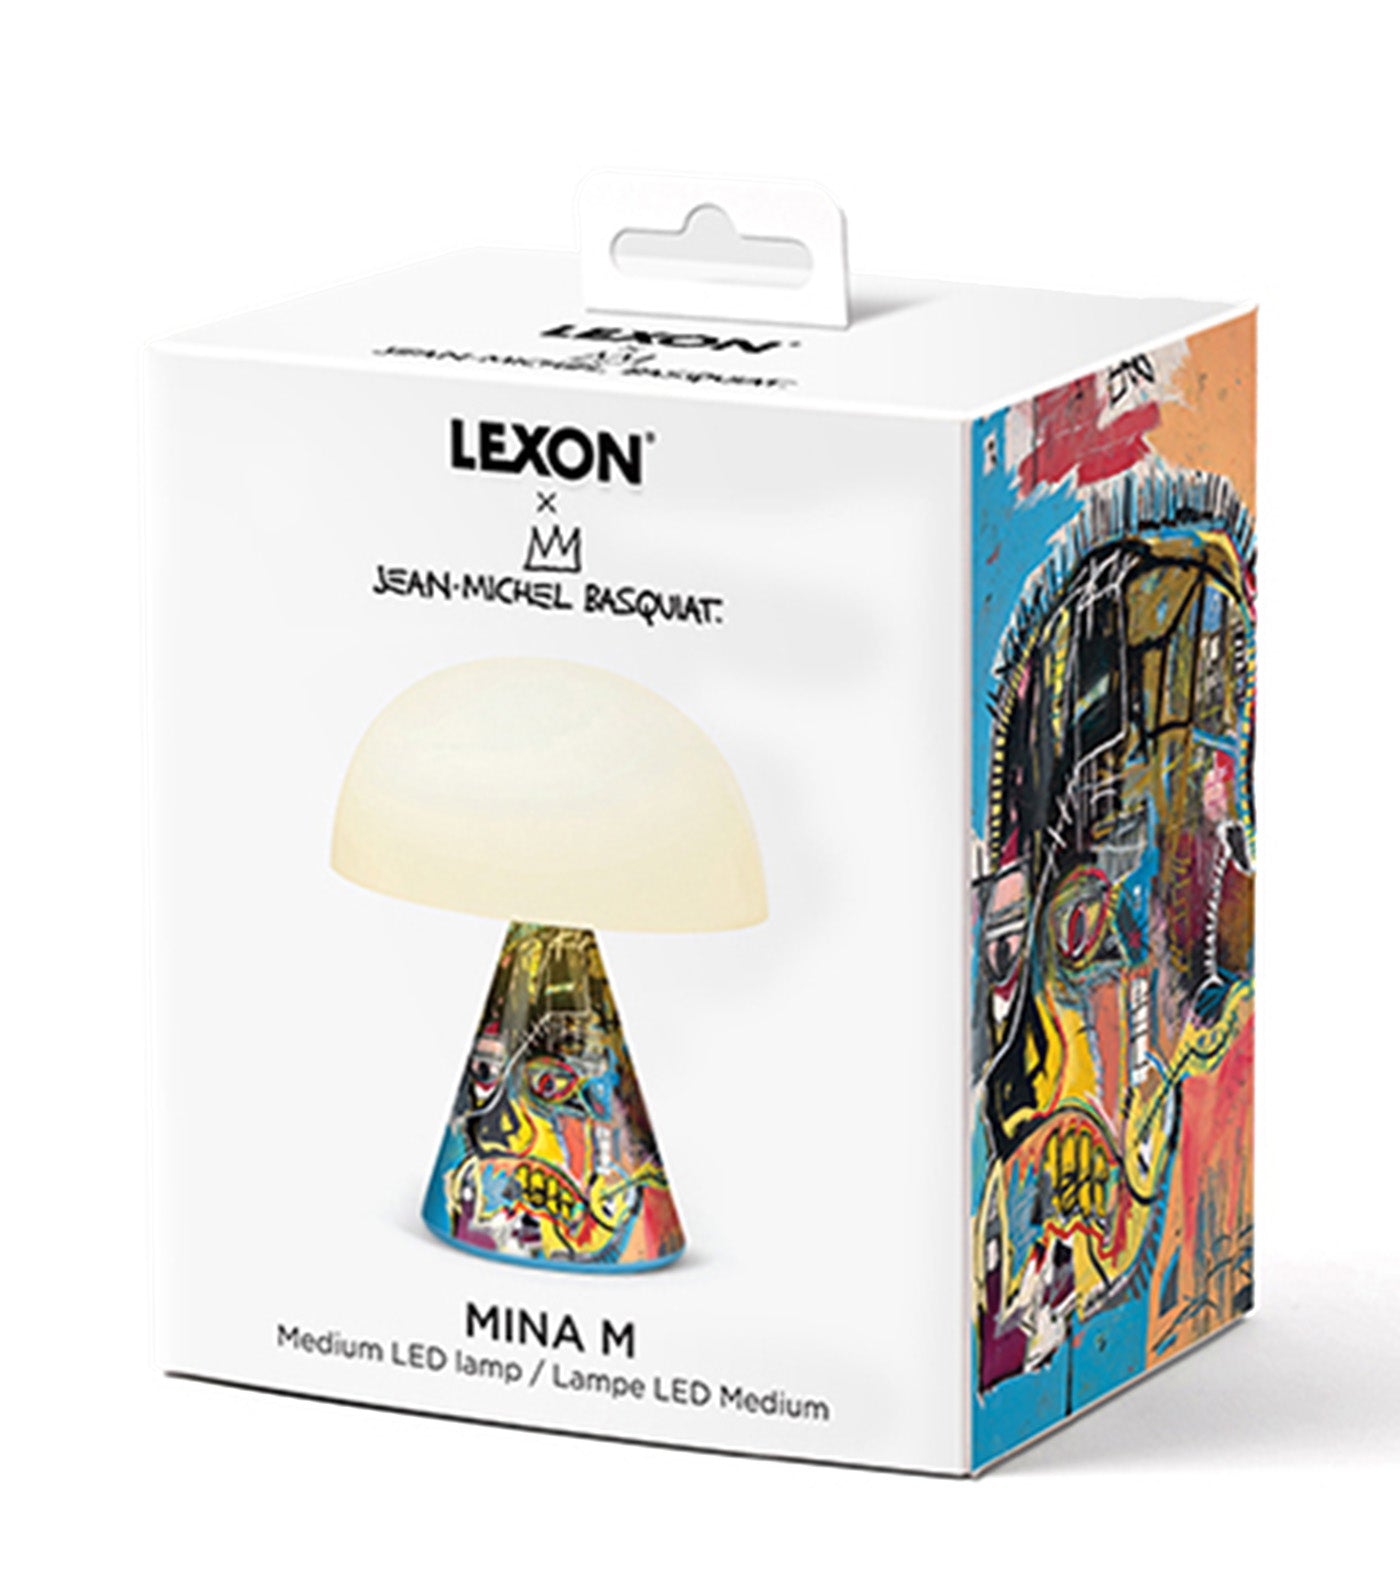 Lexon x Jean-Michel Basquiat Gift Set Untitled (Skull)